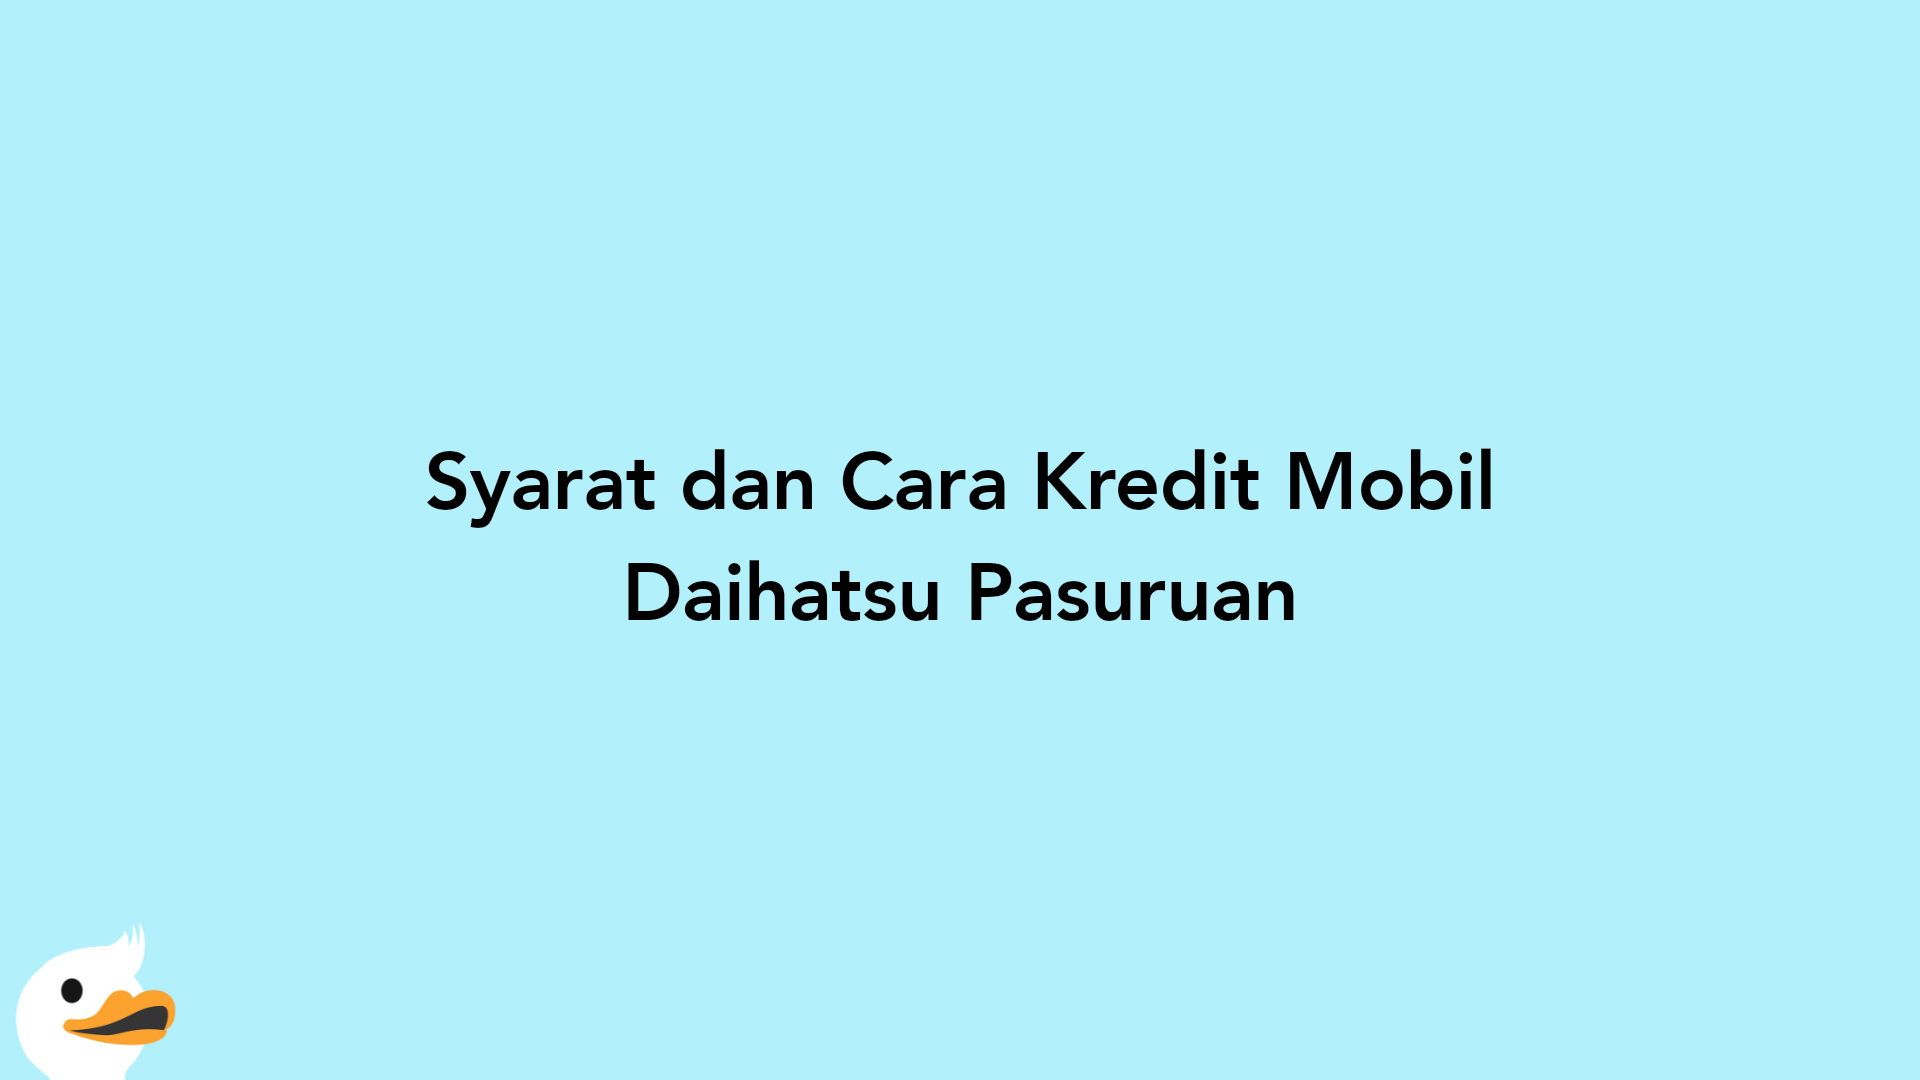 Syarat dan Cara Kredit Mobil Daihatsu Pasuruan